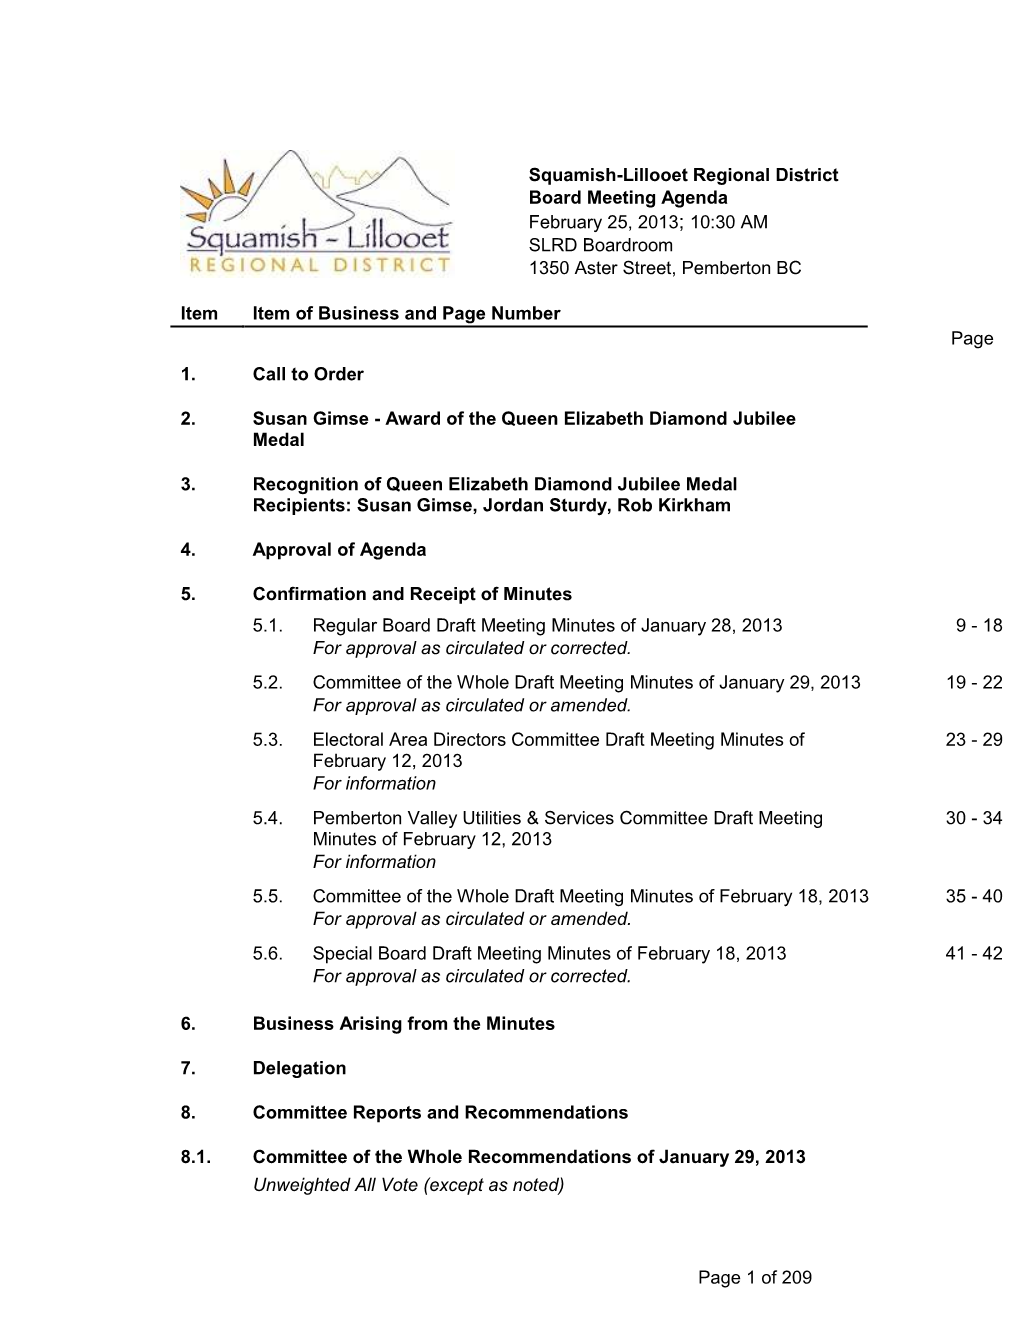 Squamish-Lillooet Regional District Board Meeting Agenda February 25, 2013; 10:30 AM SLRD Boardroom 1350 Aster Street, Pemberton BC